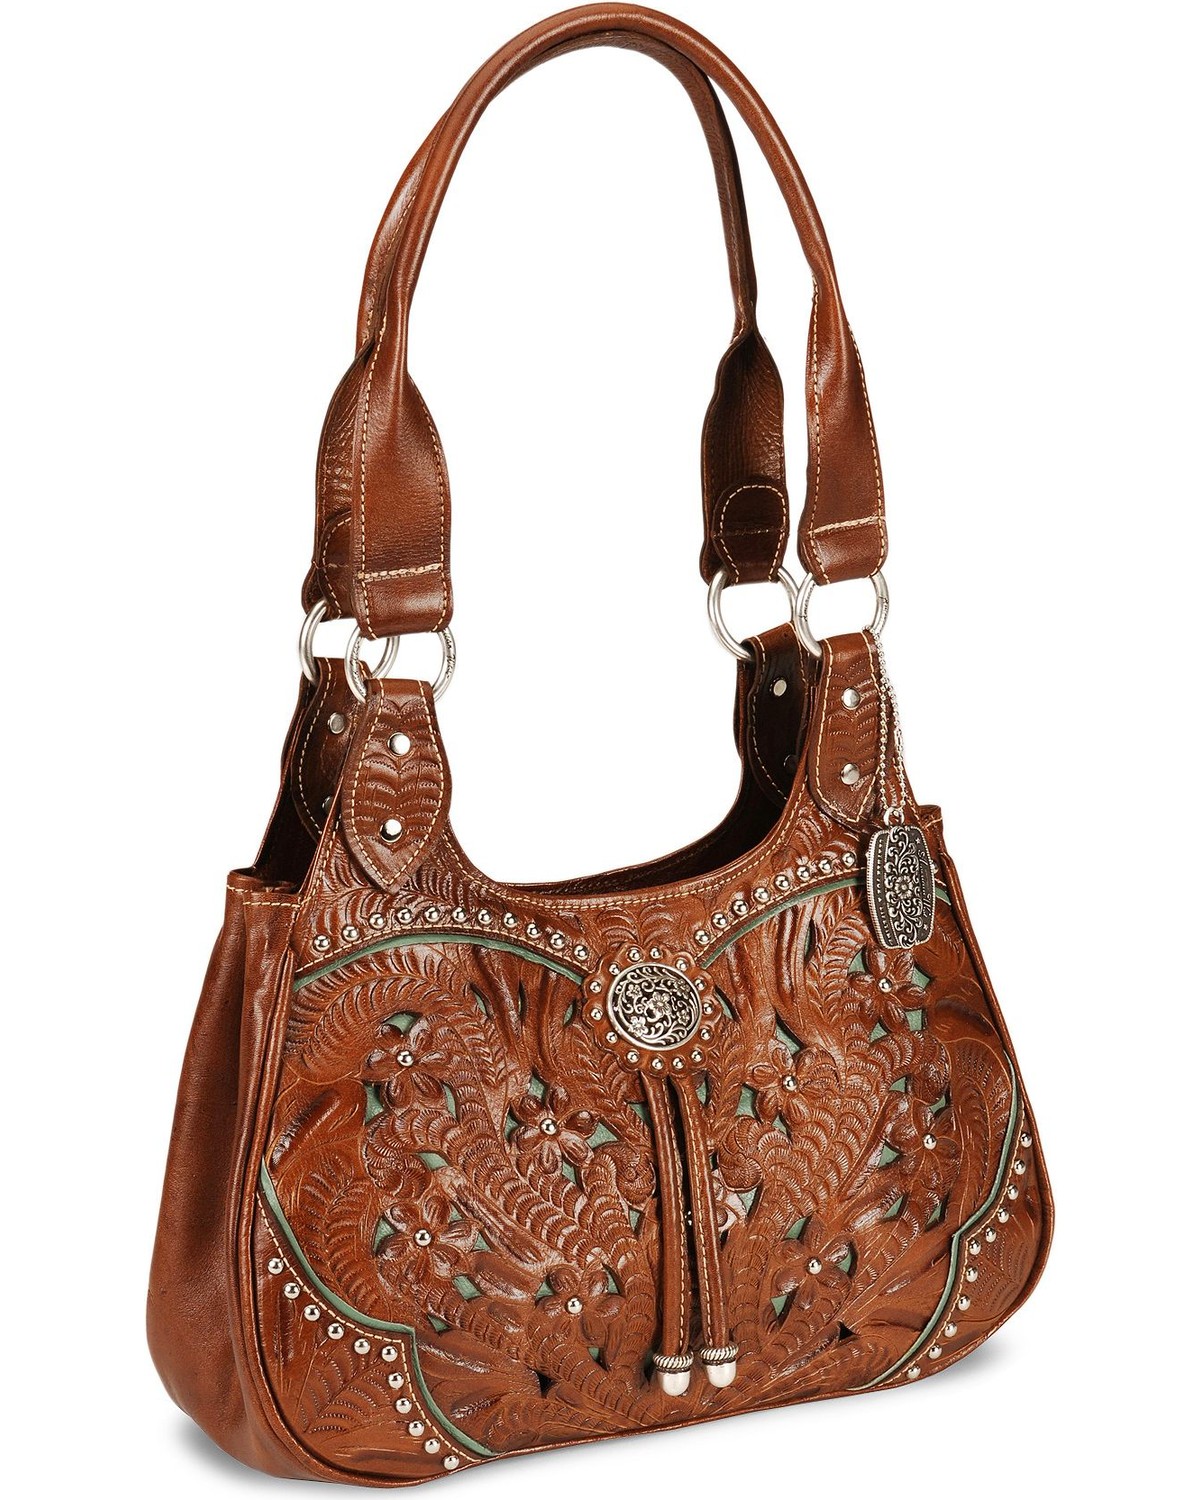 American West Lady Lace Tote Handbag